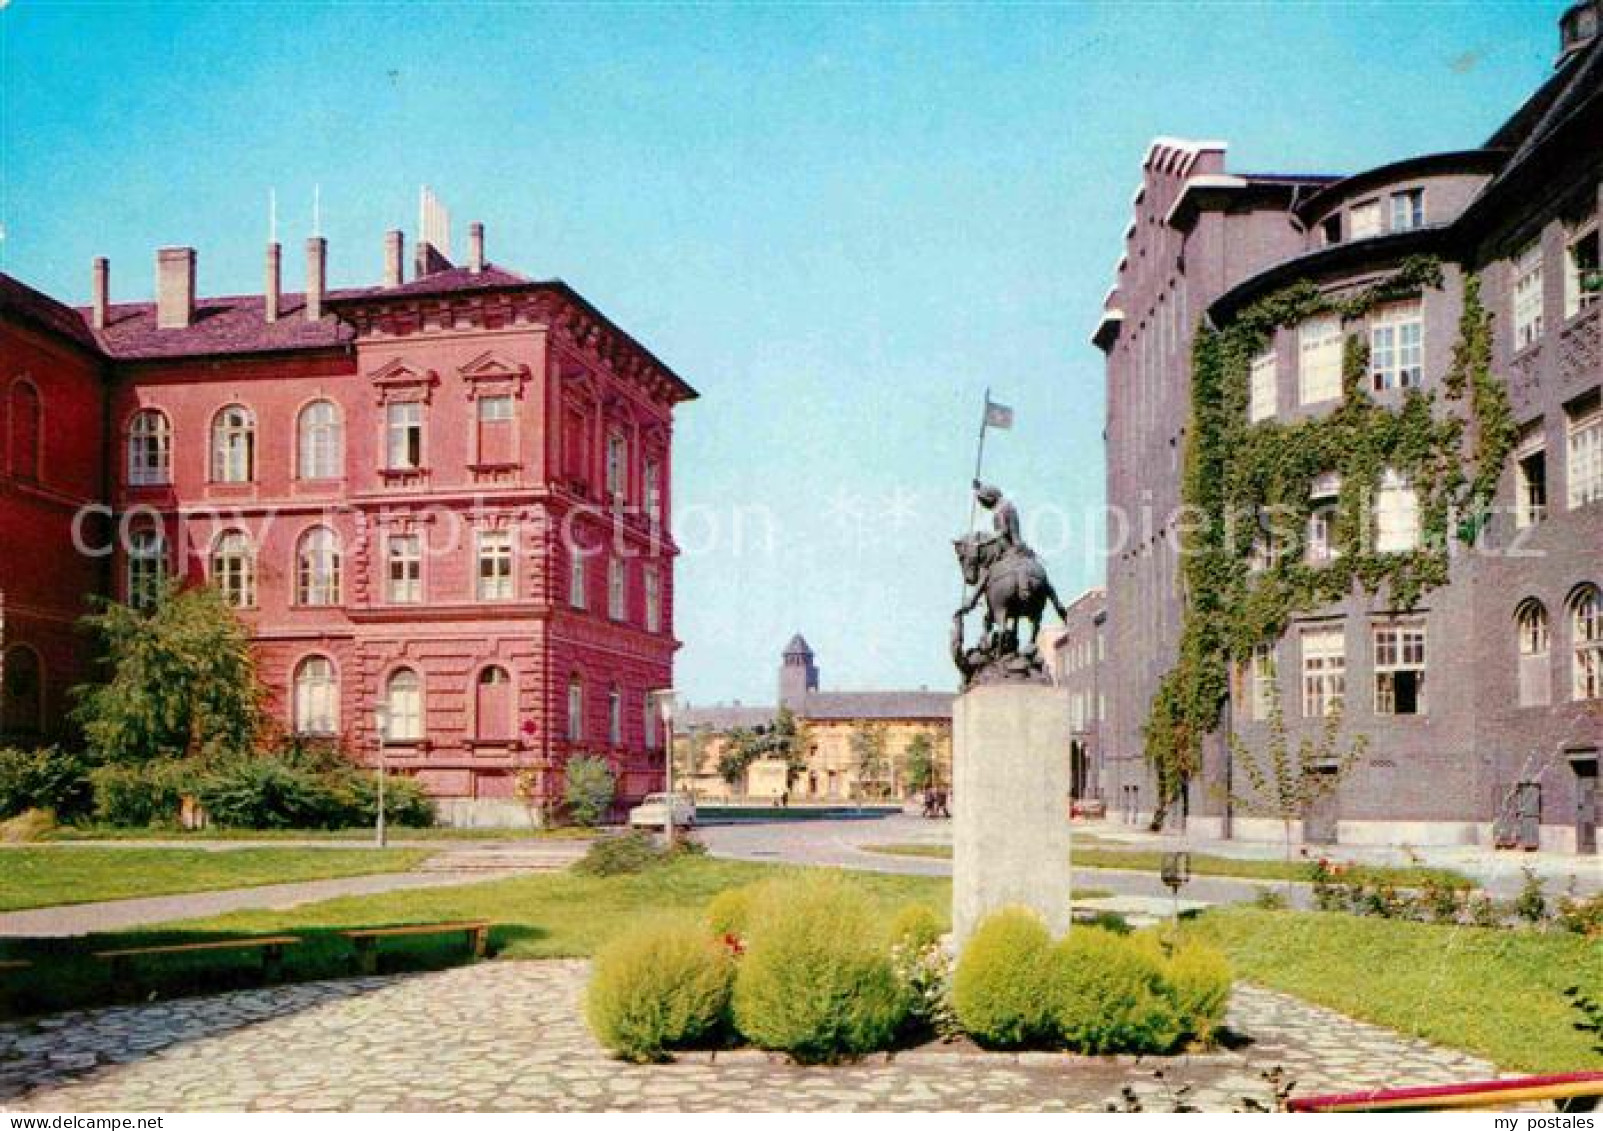 72764431 Szeged Rerrich Platz Sankt Georgs Denkmal  Szeged - Hungary